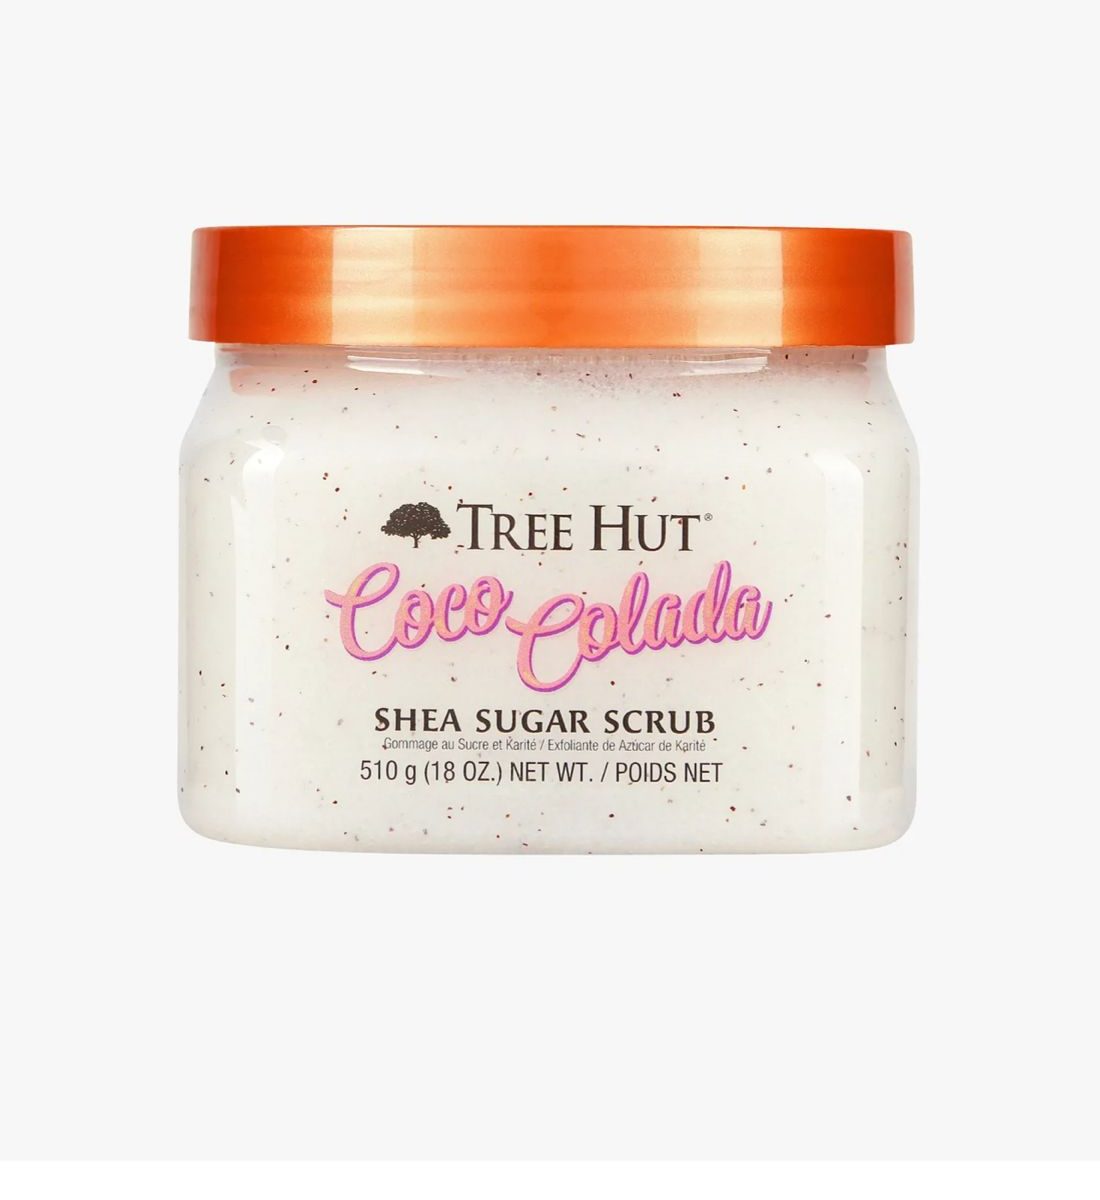 Image showing Tree Hut Coco Colada Shea Sugar Body Scrub product